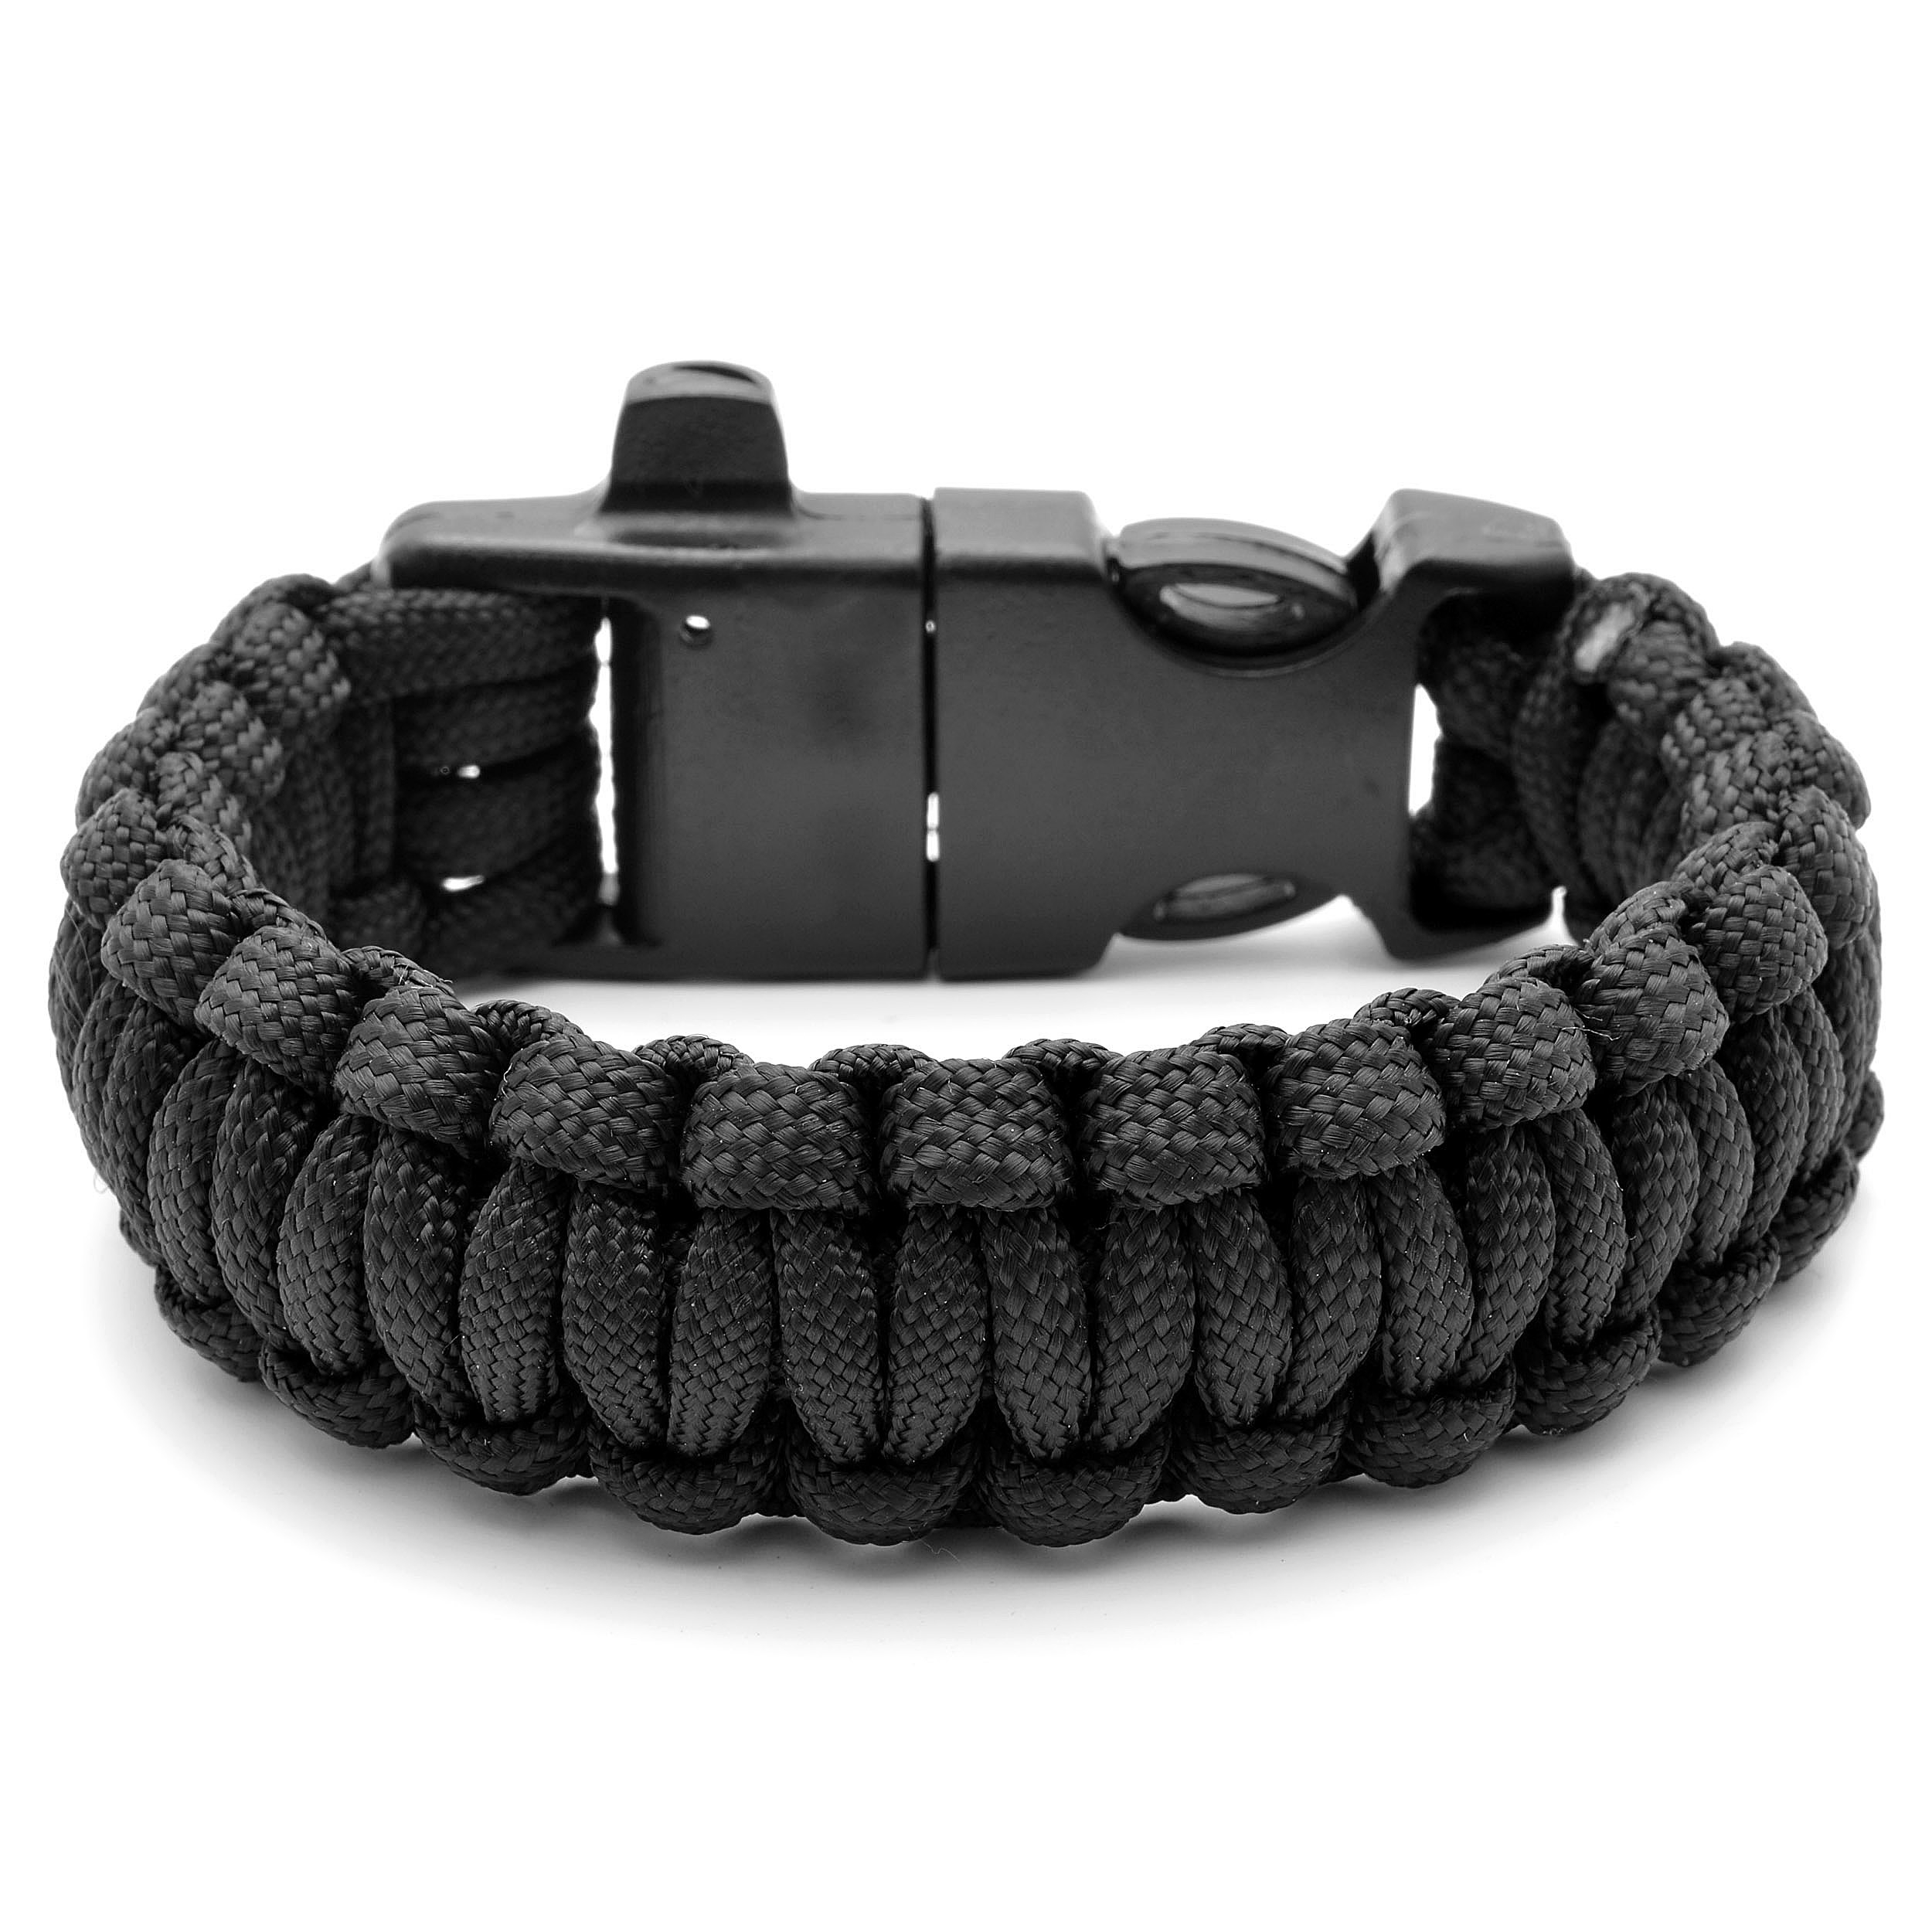 Kissmi 10 Pack Paracord Bracelet Survival Gear with India | Ubuy